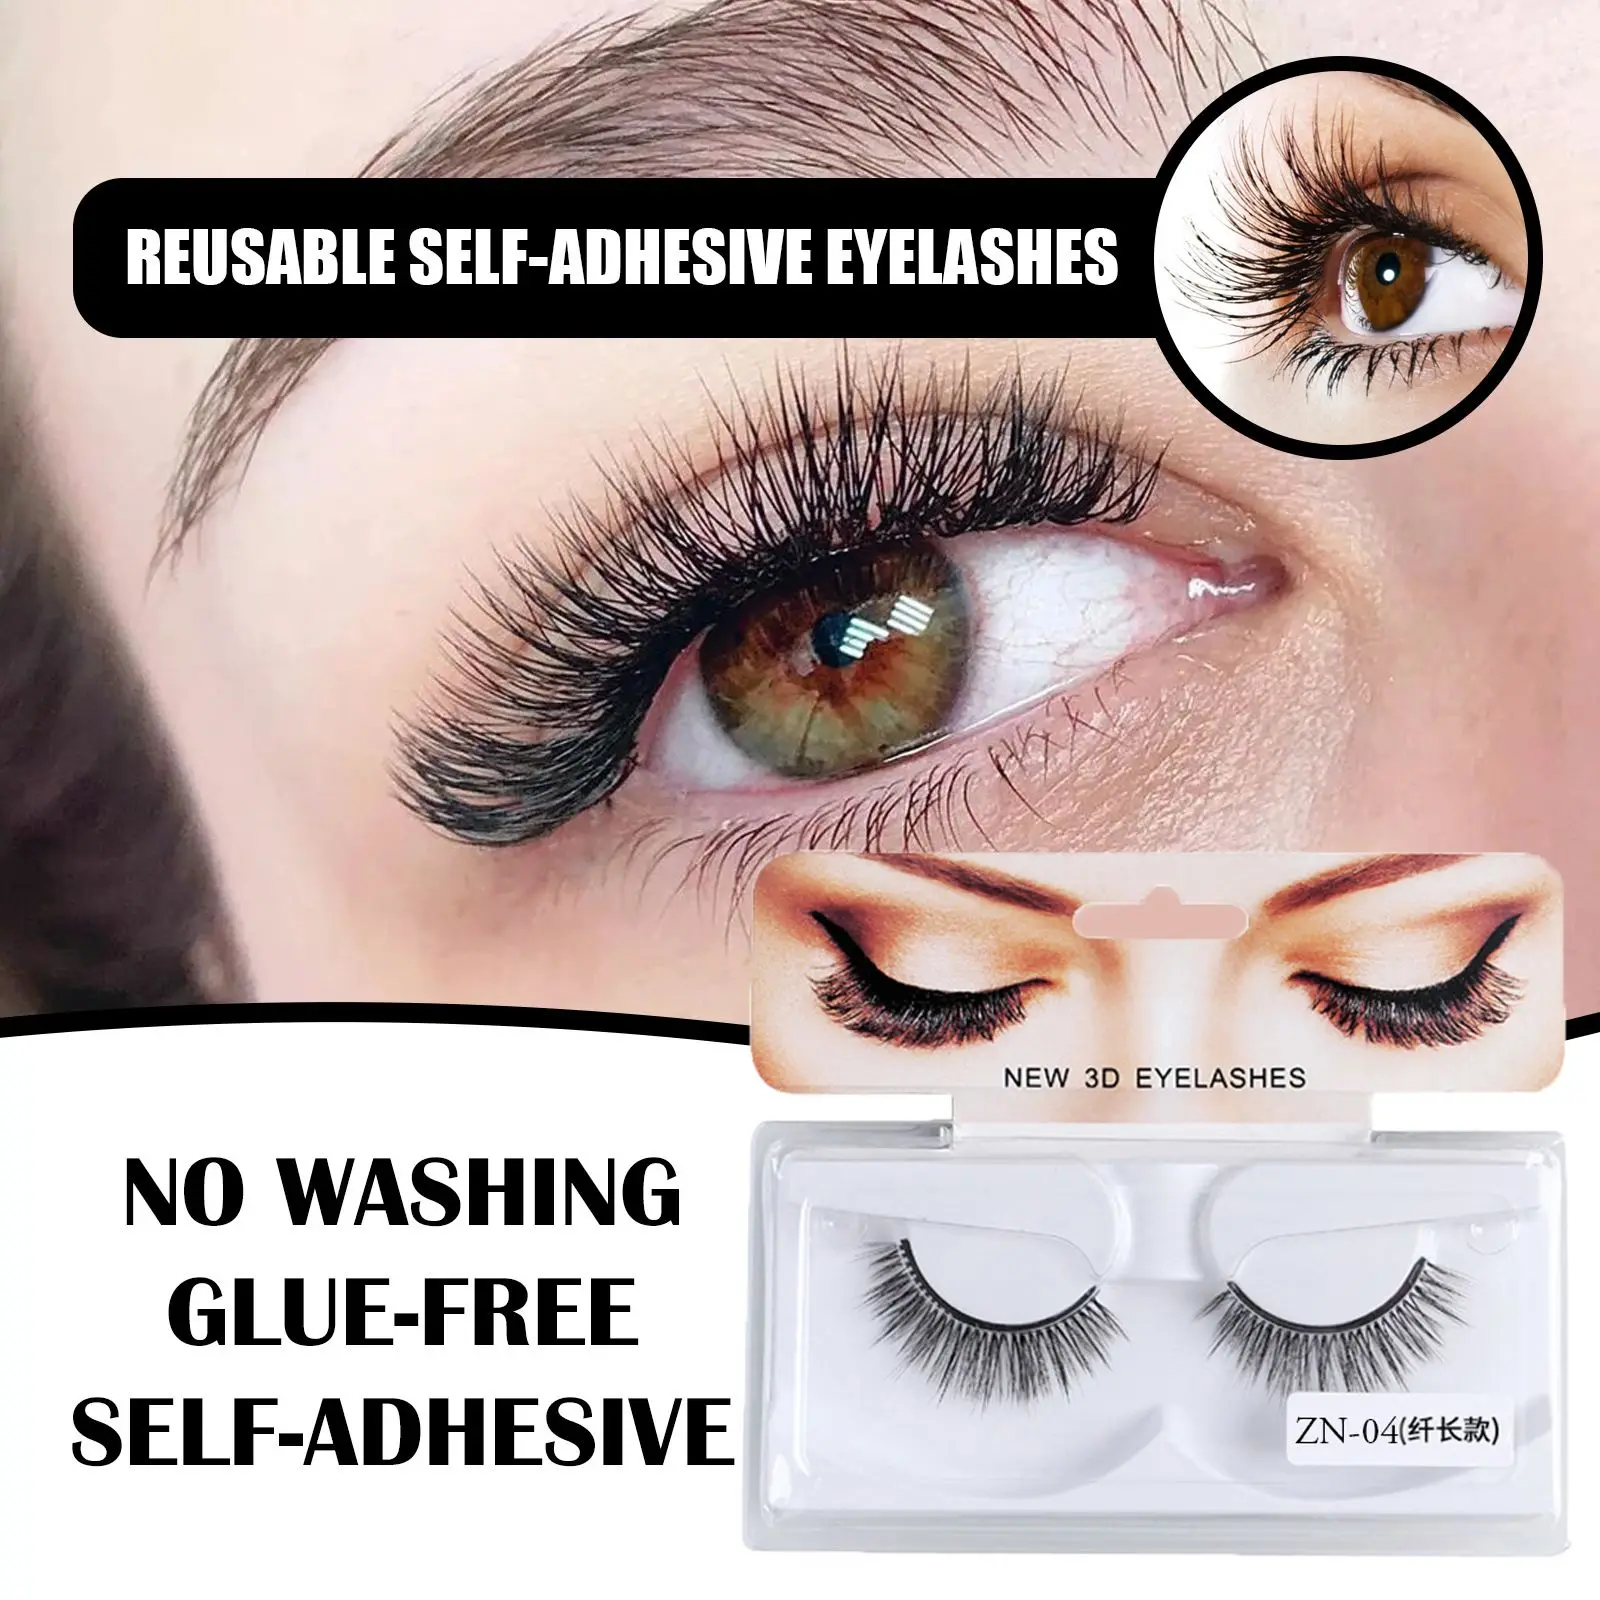 

Wispy Long Thick Natural False Eyelashes No Need Glue Mink Hair Reusable Self-Adhesive Eyelashes Quick to Wear